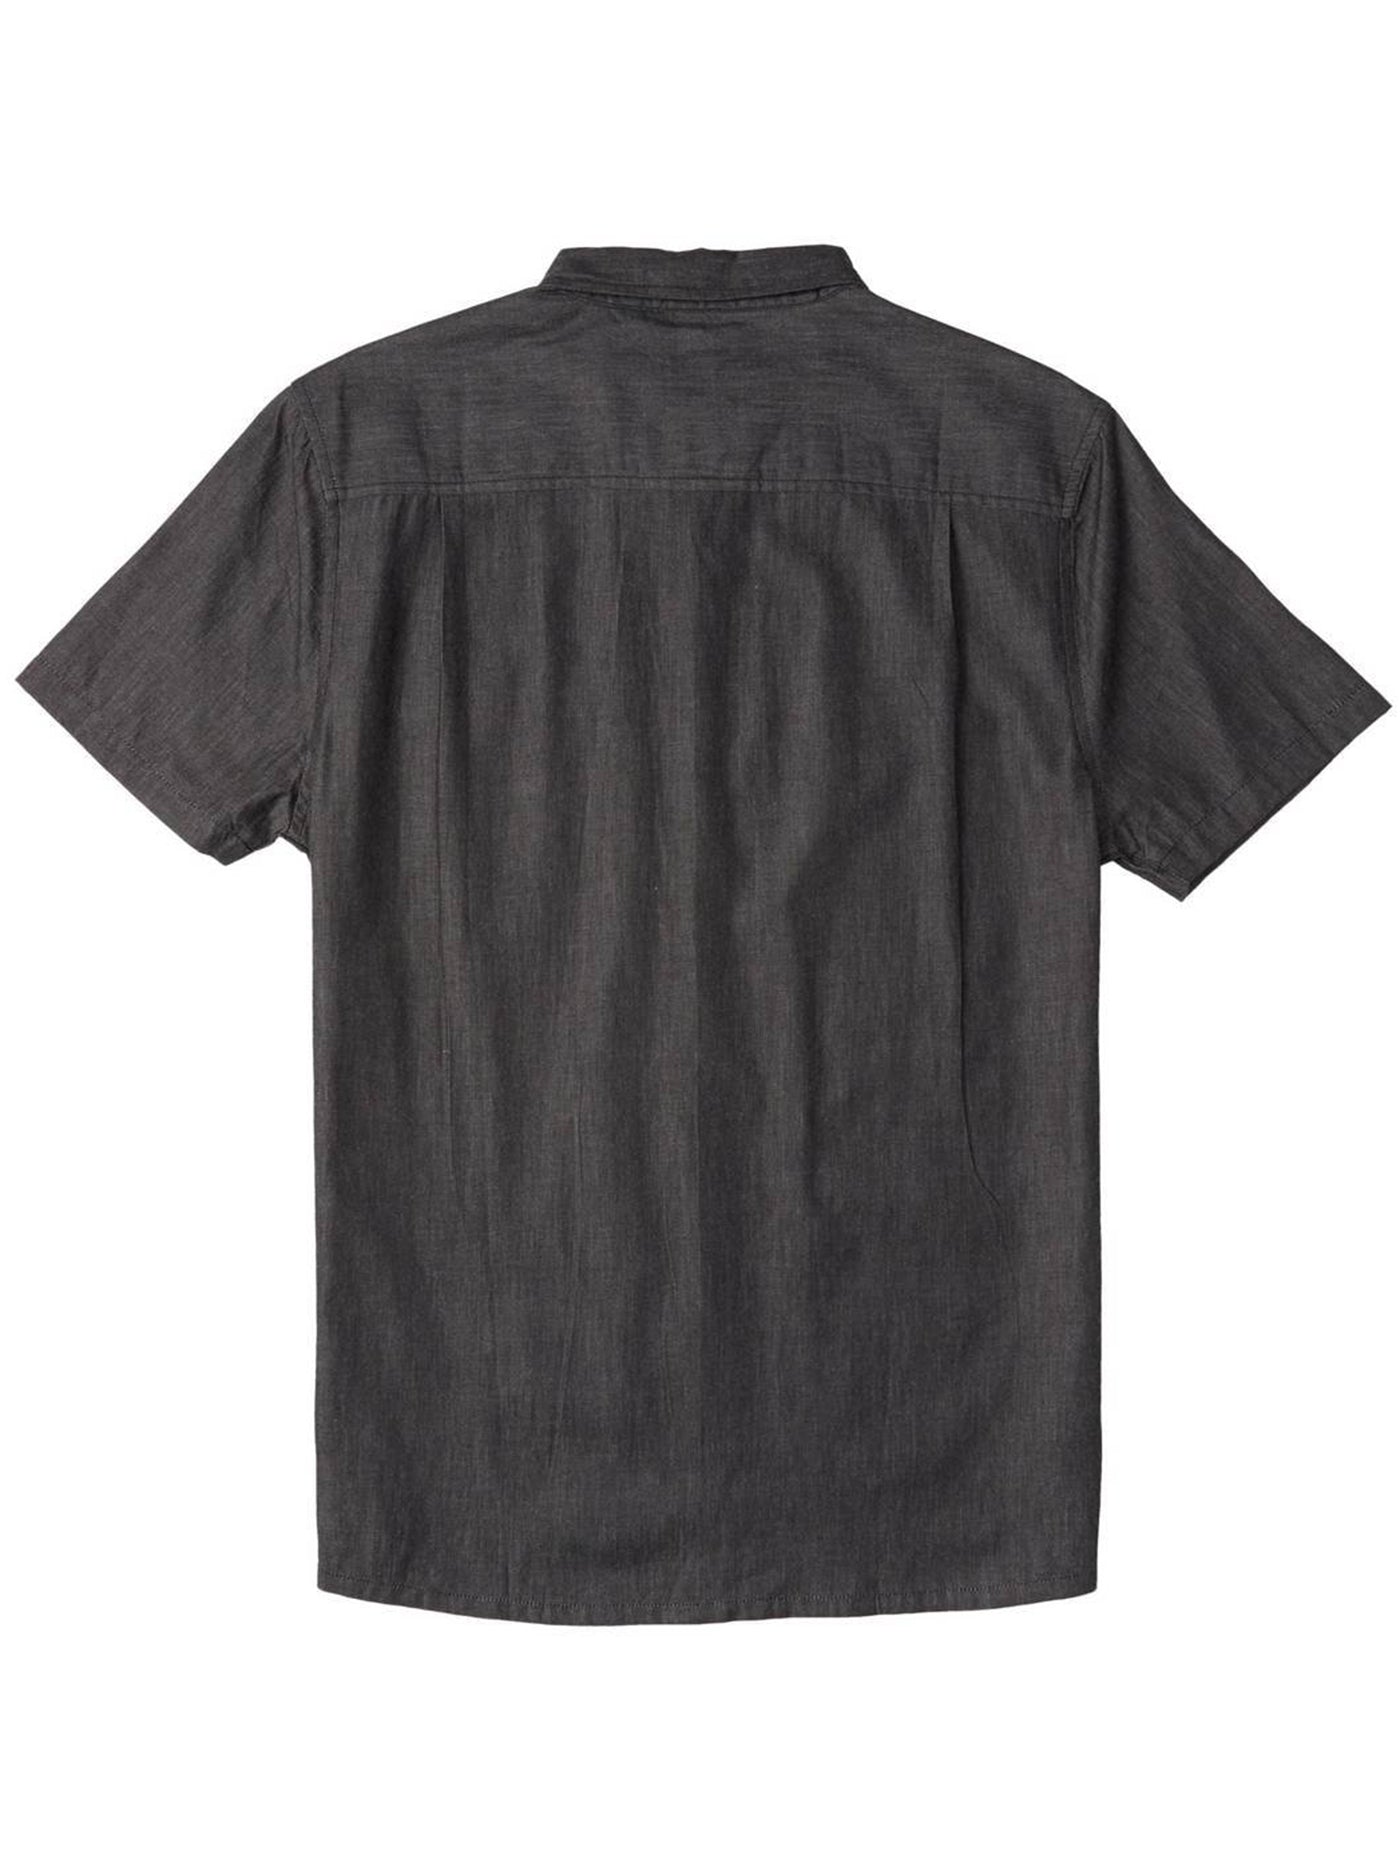 Element Vega Short Sleeve Buttondown Shirt